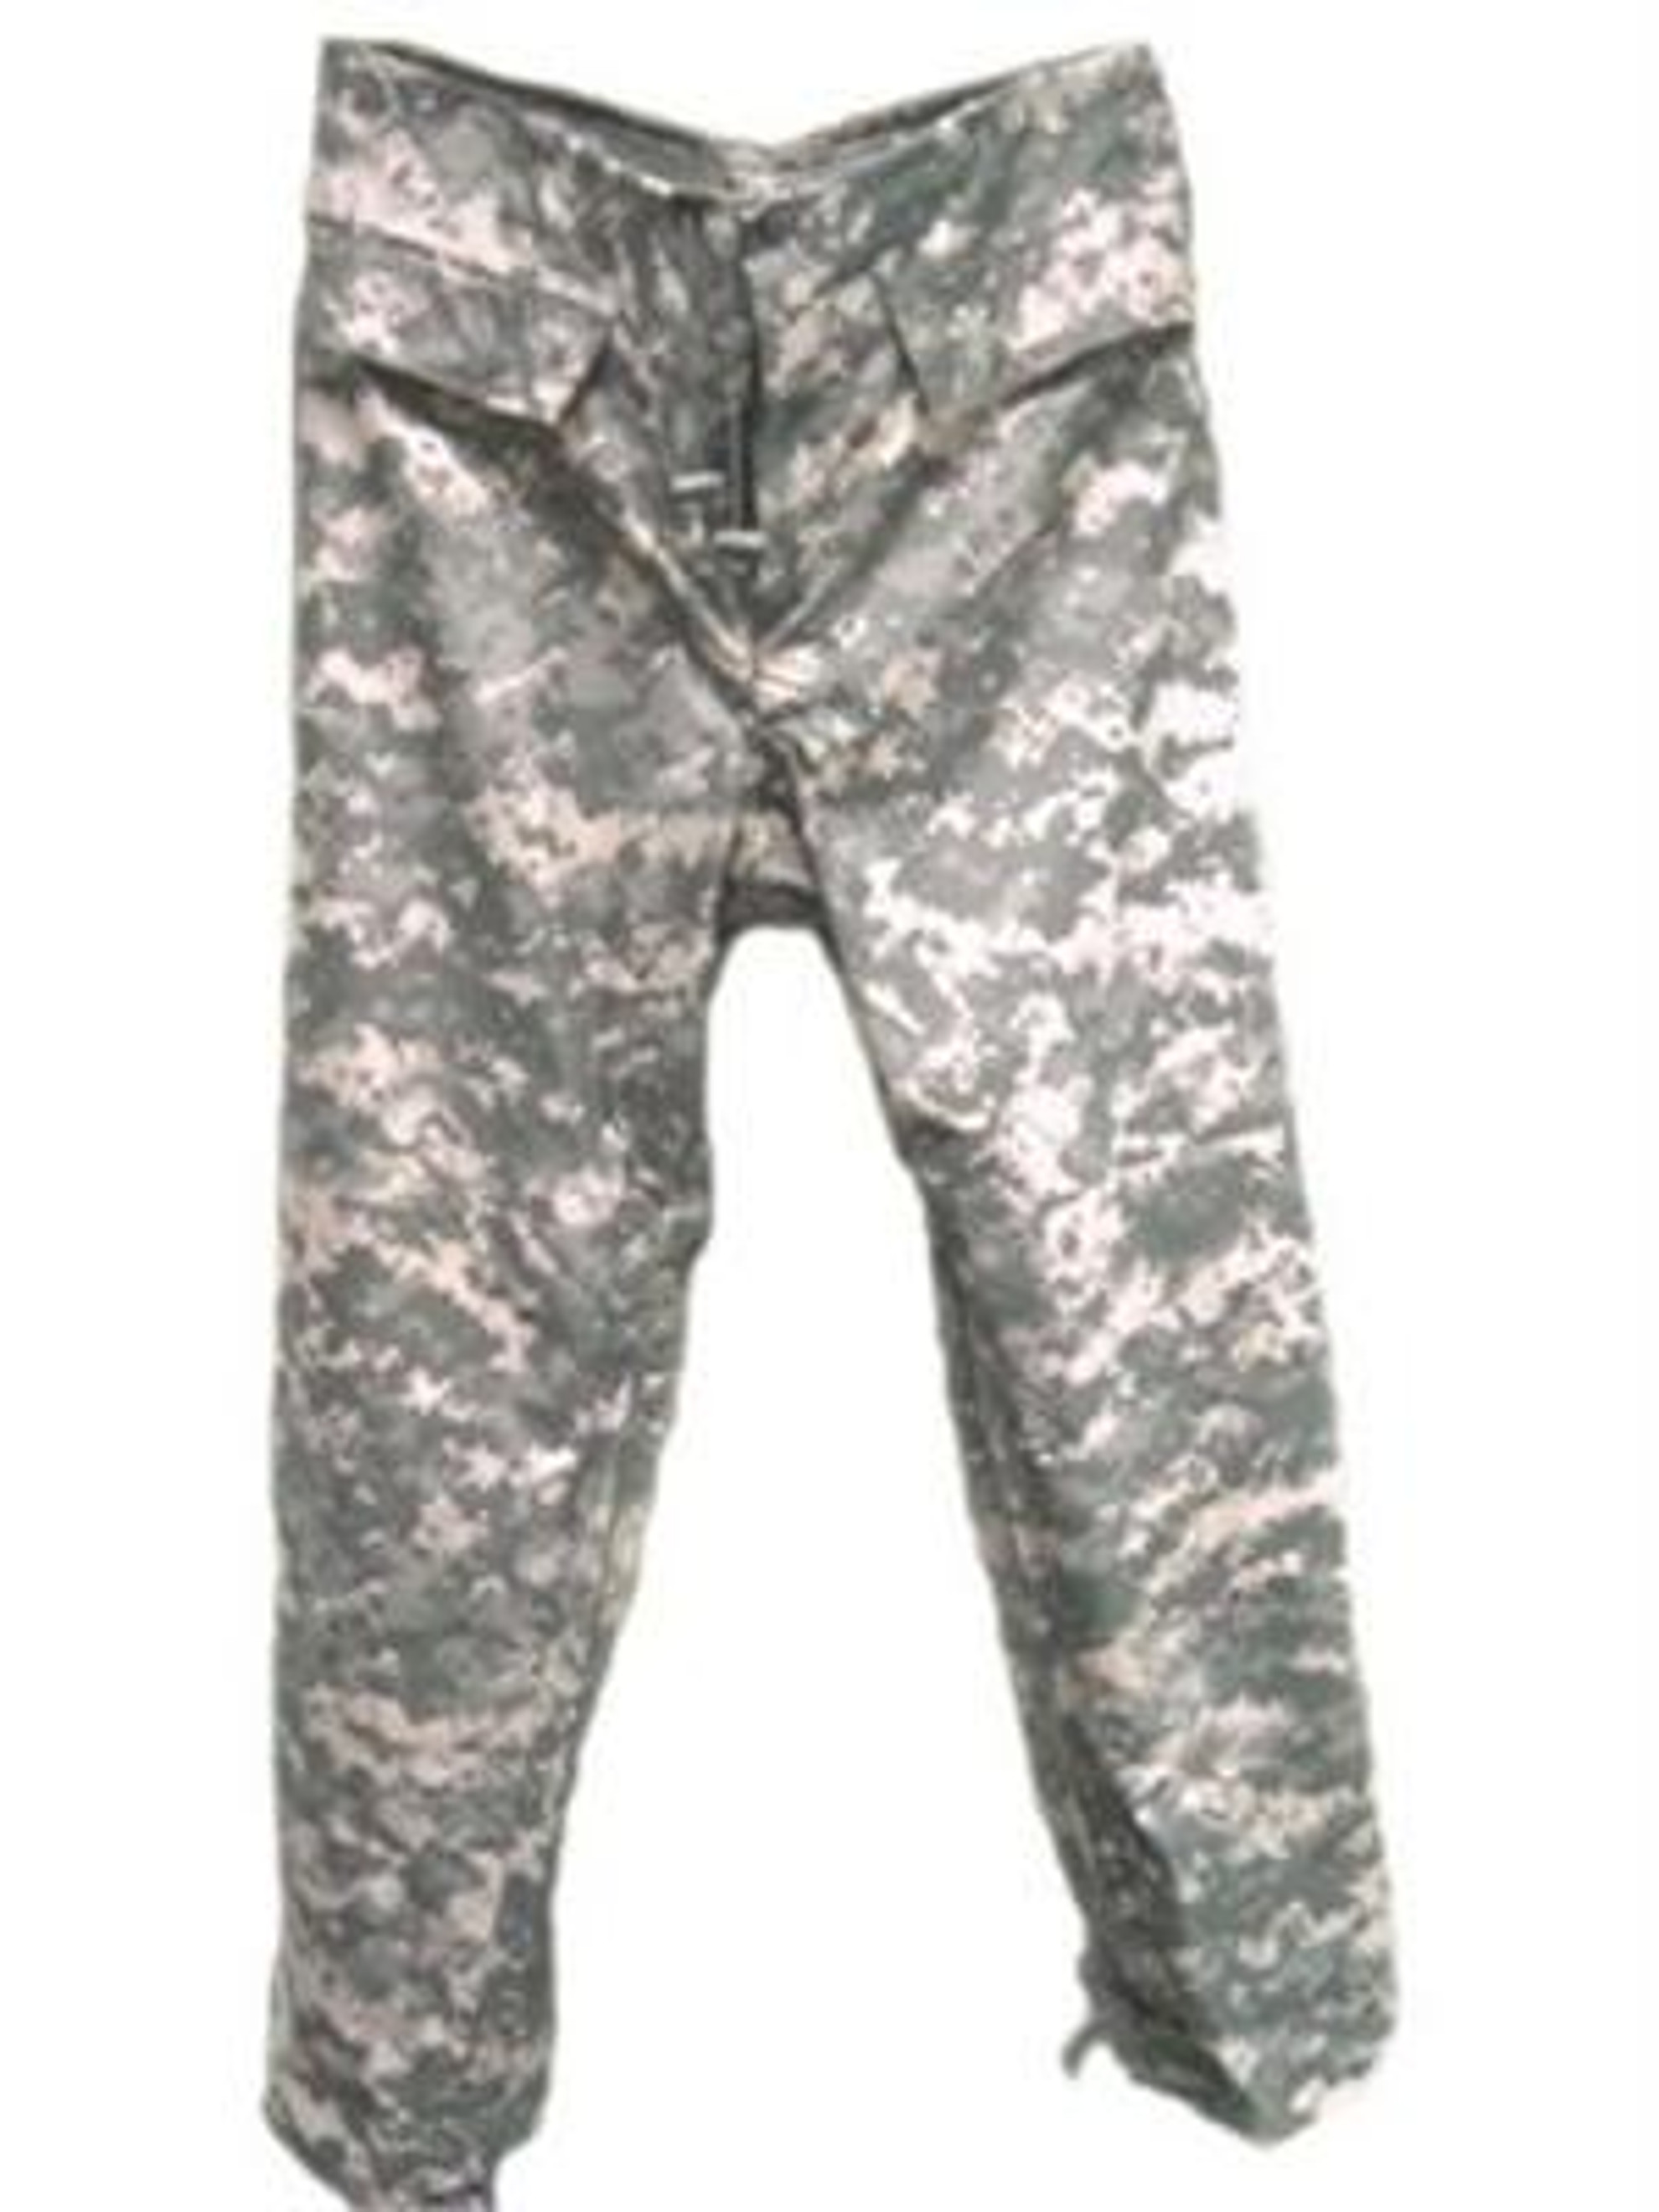 U.S. Air Forces Improved Rain Suit Trousers